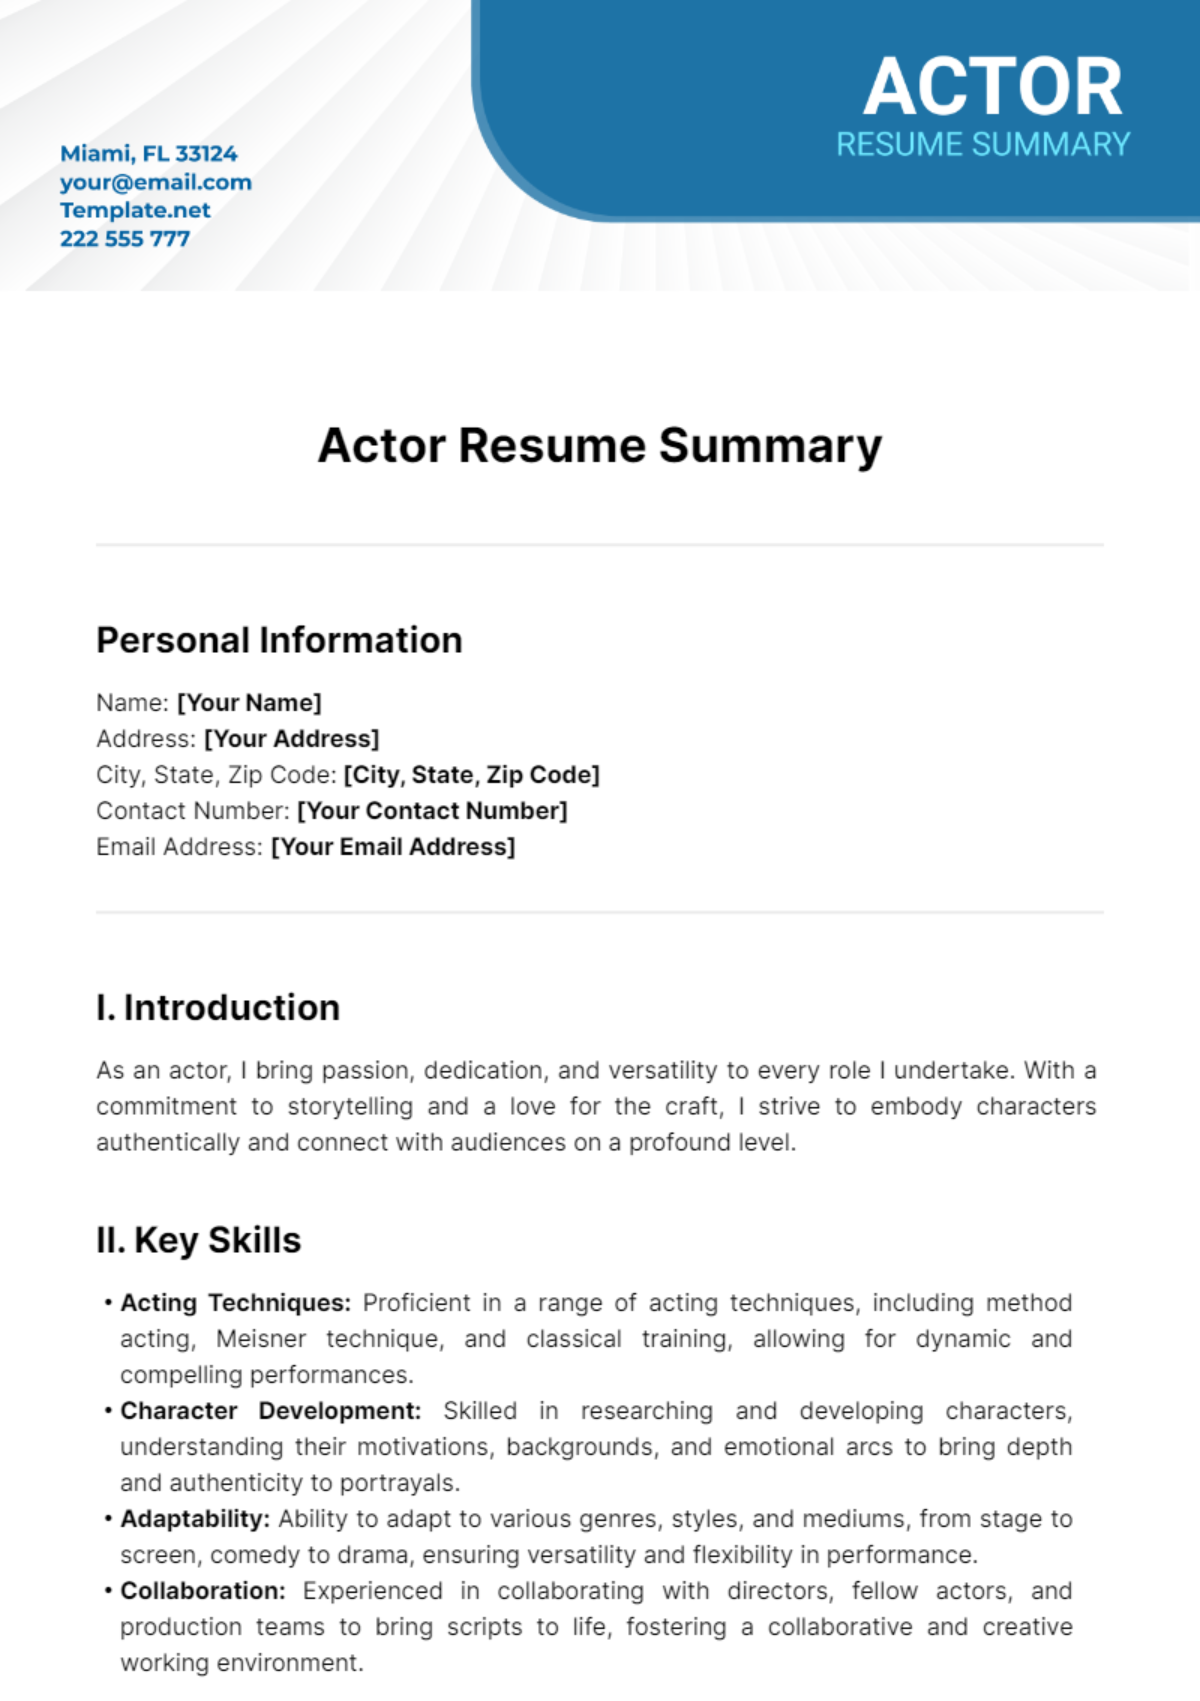 Actor Resume Summary Template